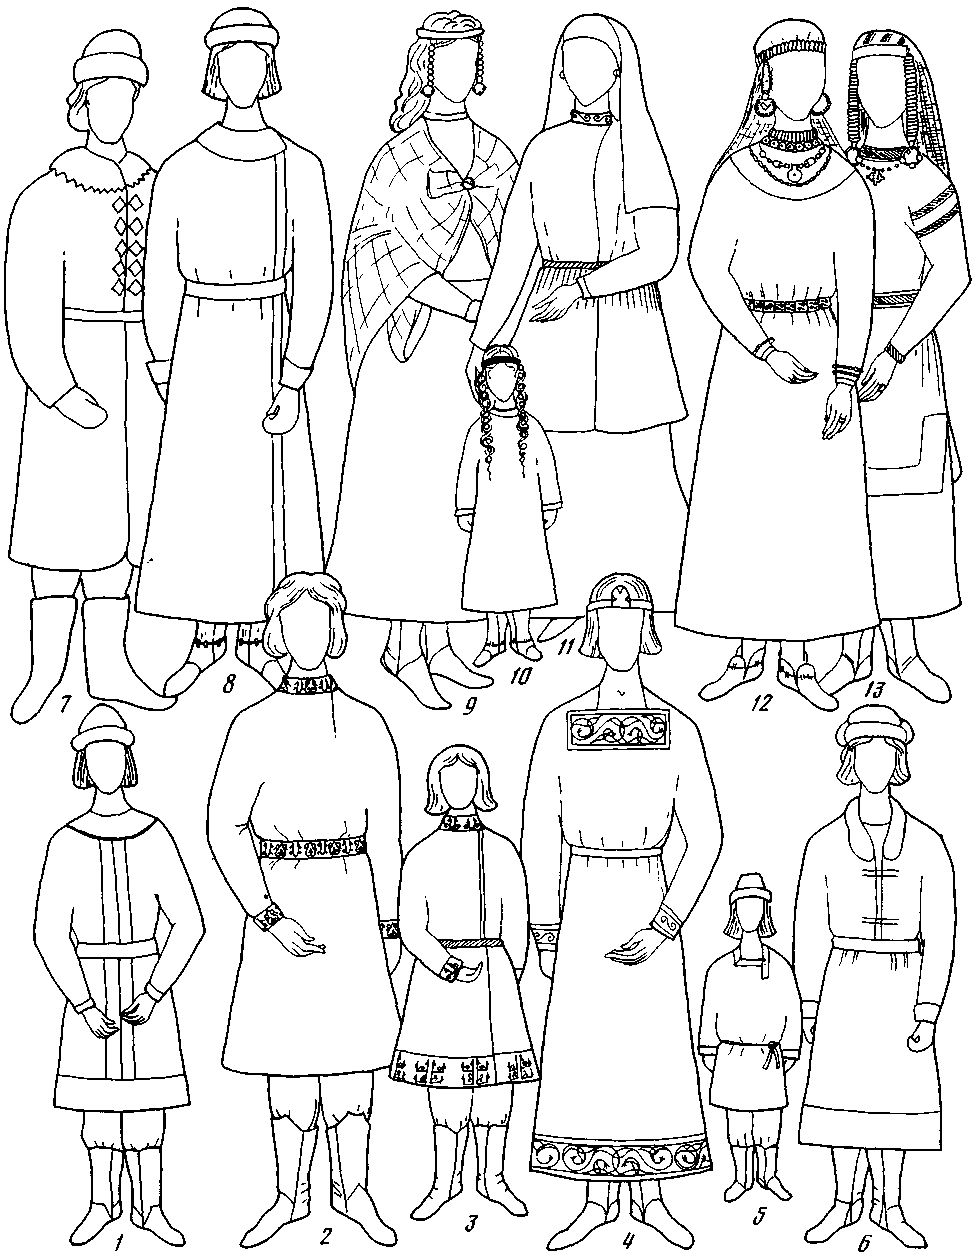 Одежда славян древней Руси рисунок